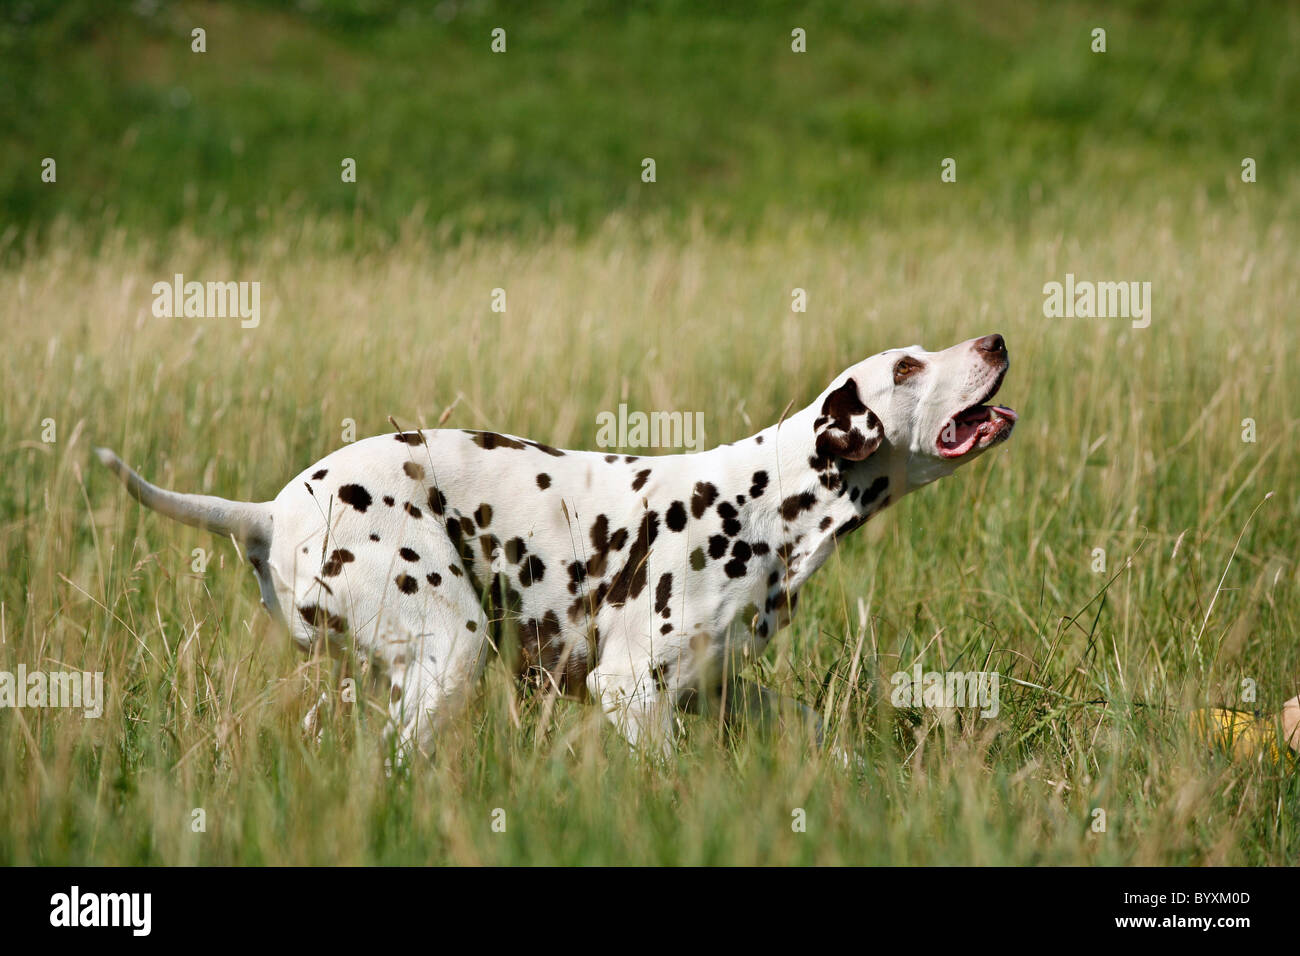 spielender Dalmatiner / playing Dalmatian Stock Photo